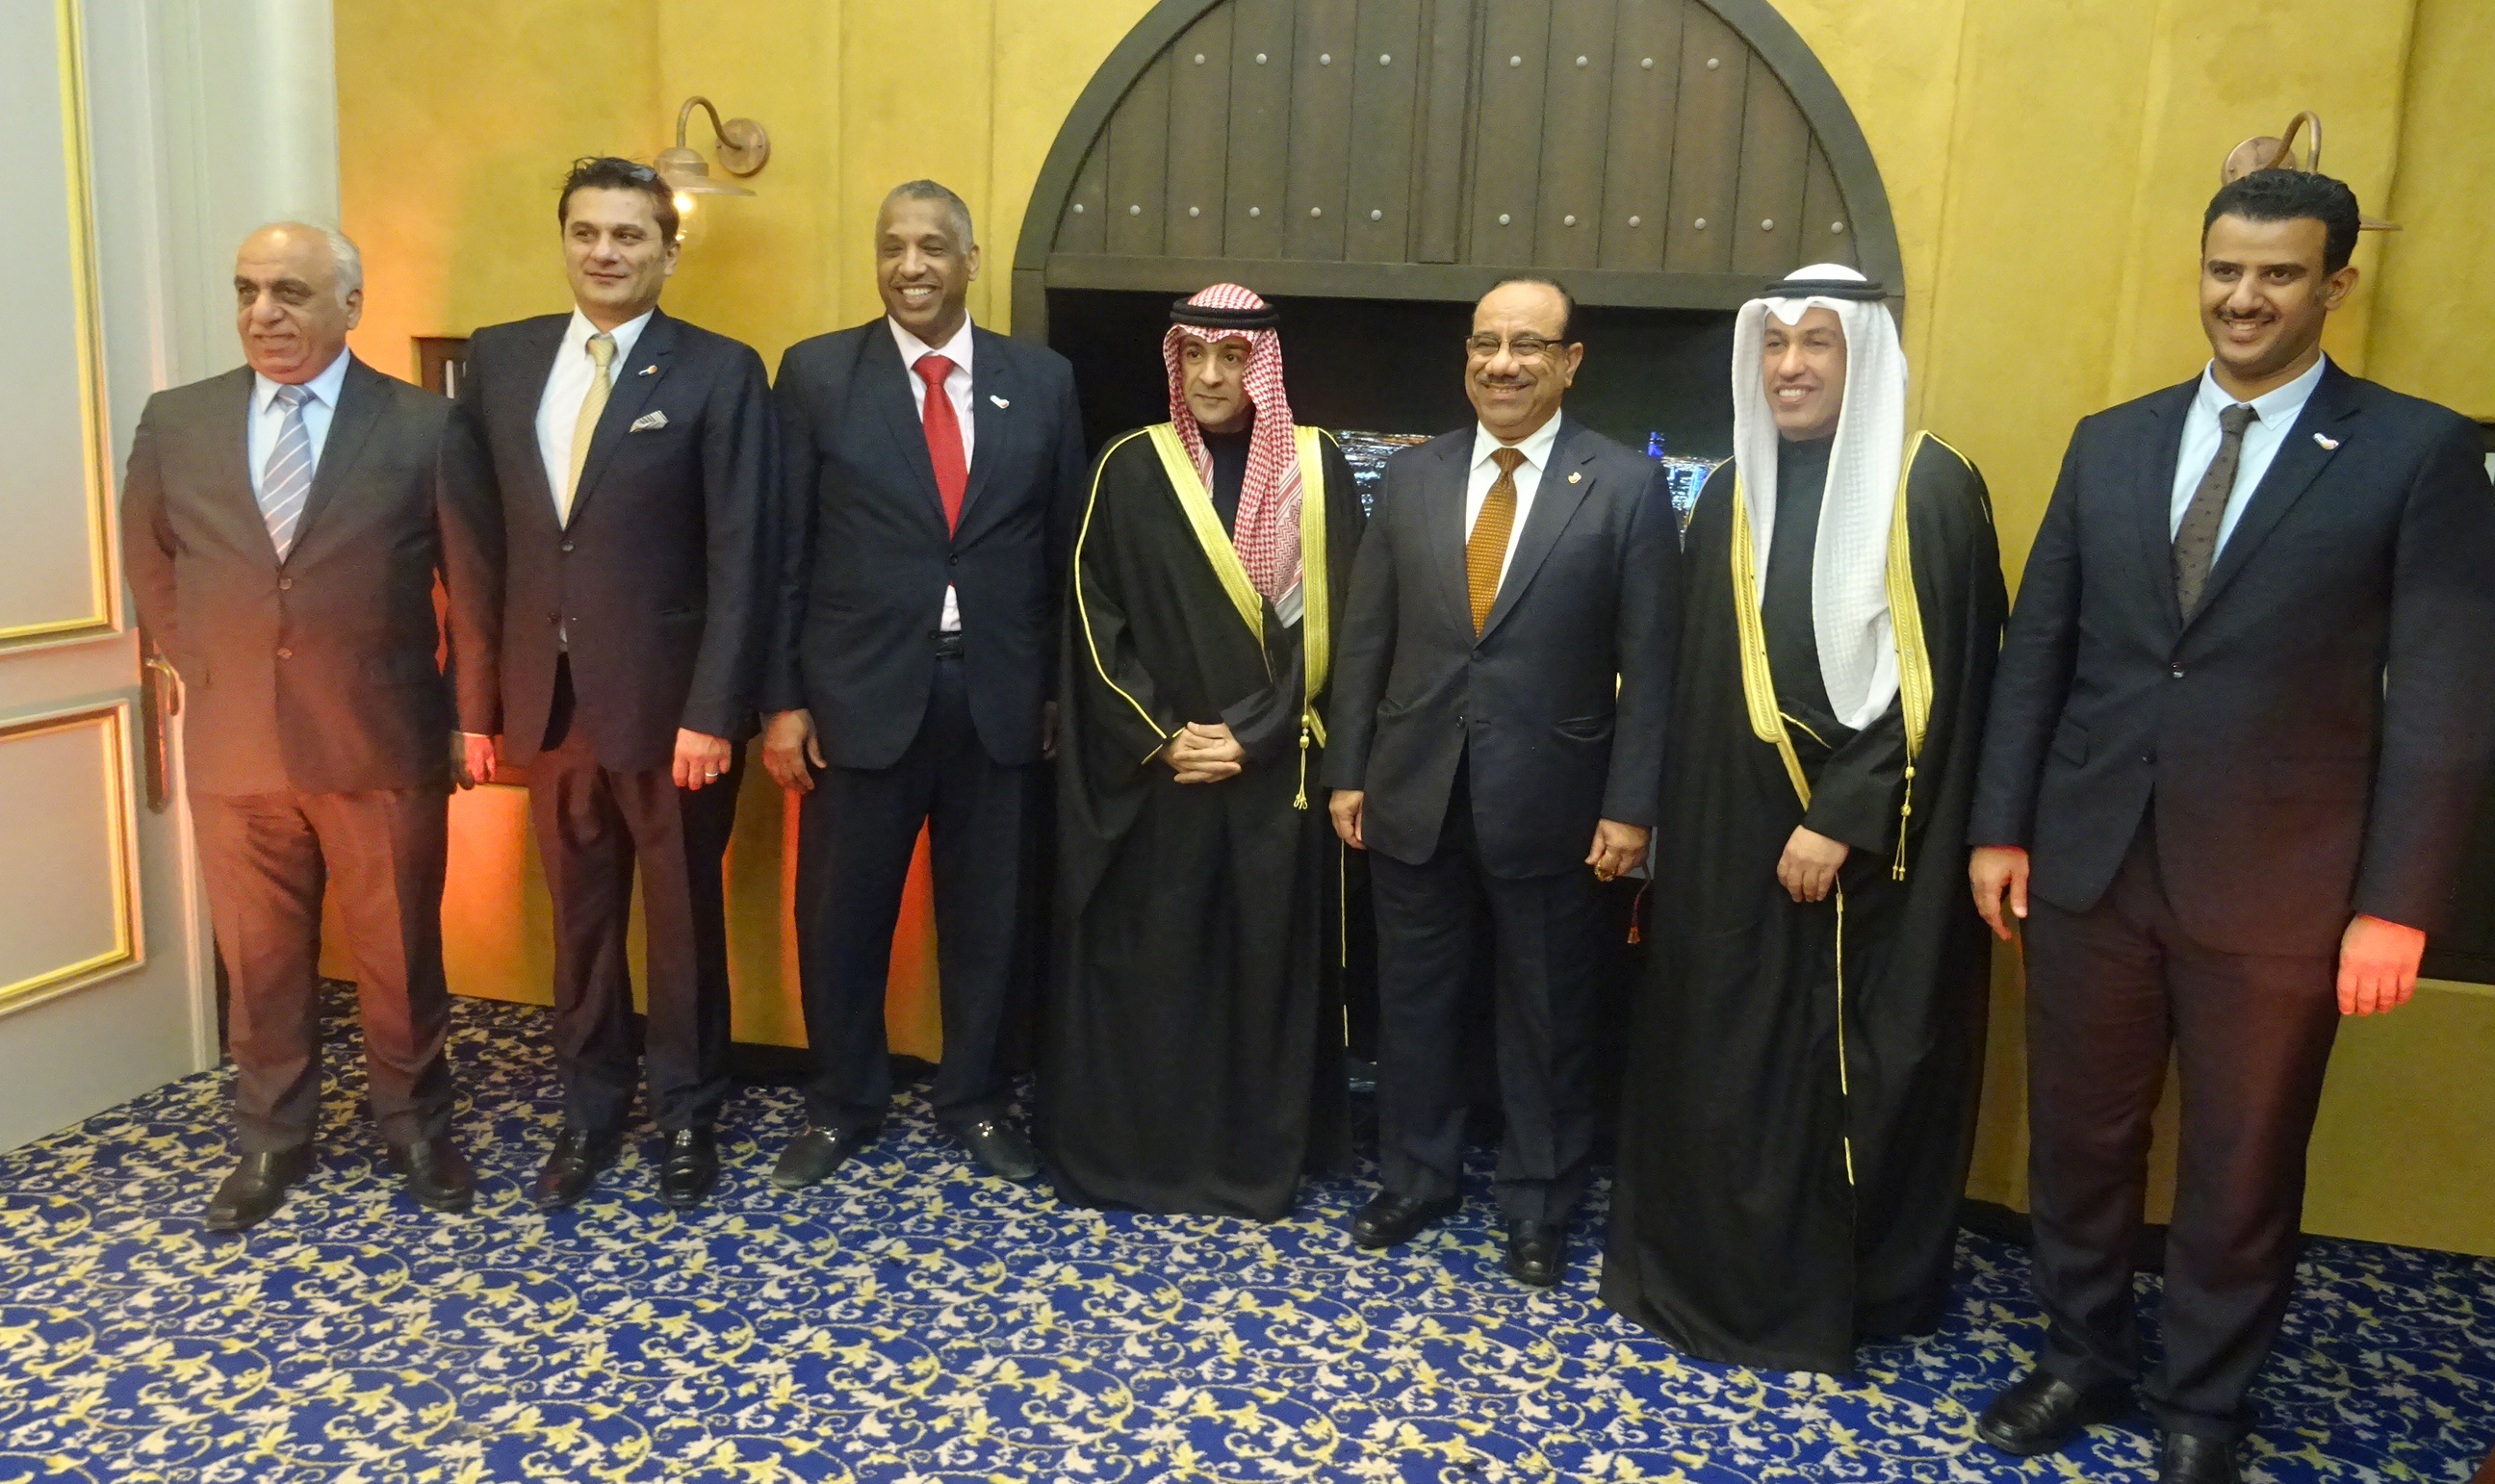 KPI delegation at the Kuwait national day reception with ambassador Jasem al Budaiwi